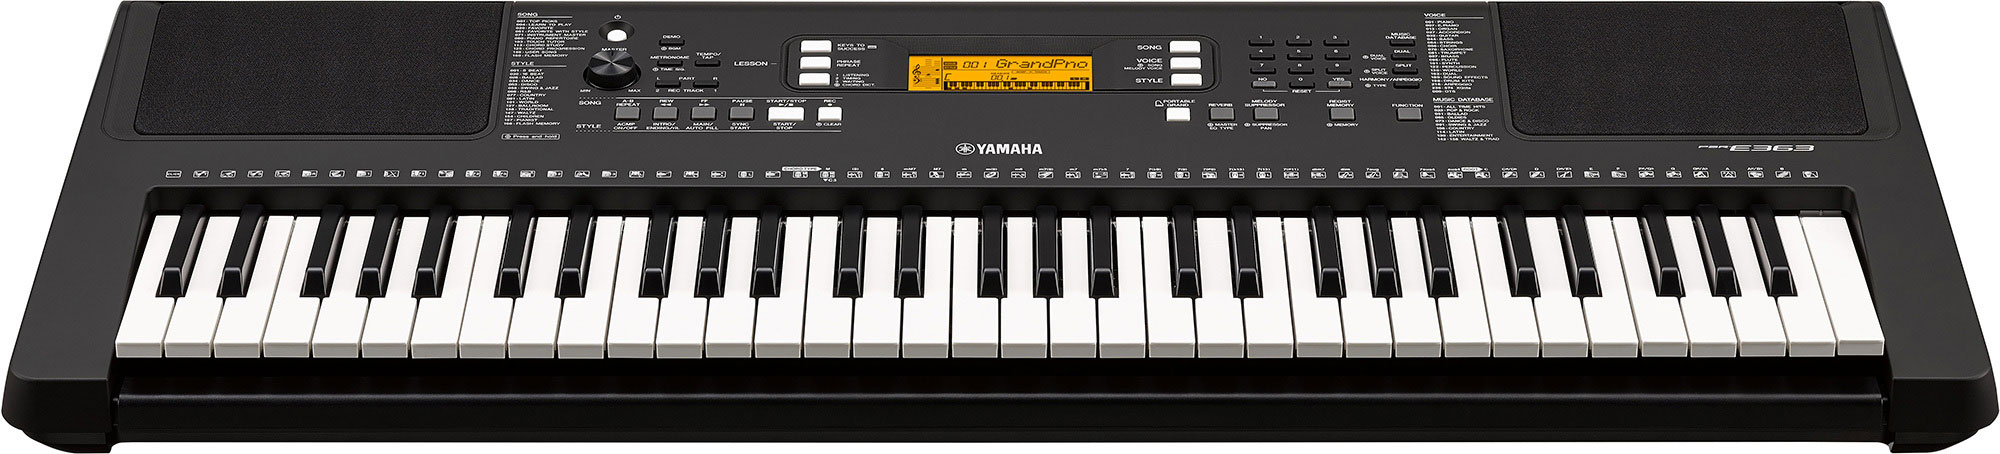 Yamaha Psr-e363 - - Entertainerkeyboard - Variation 1